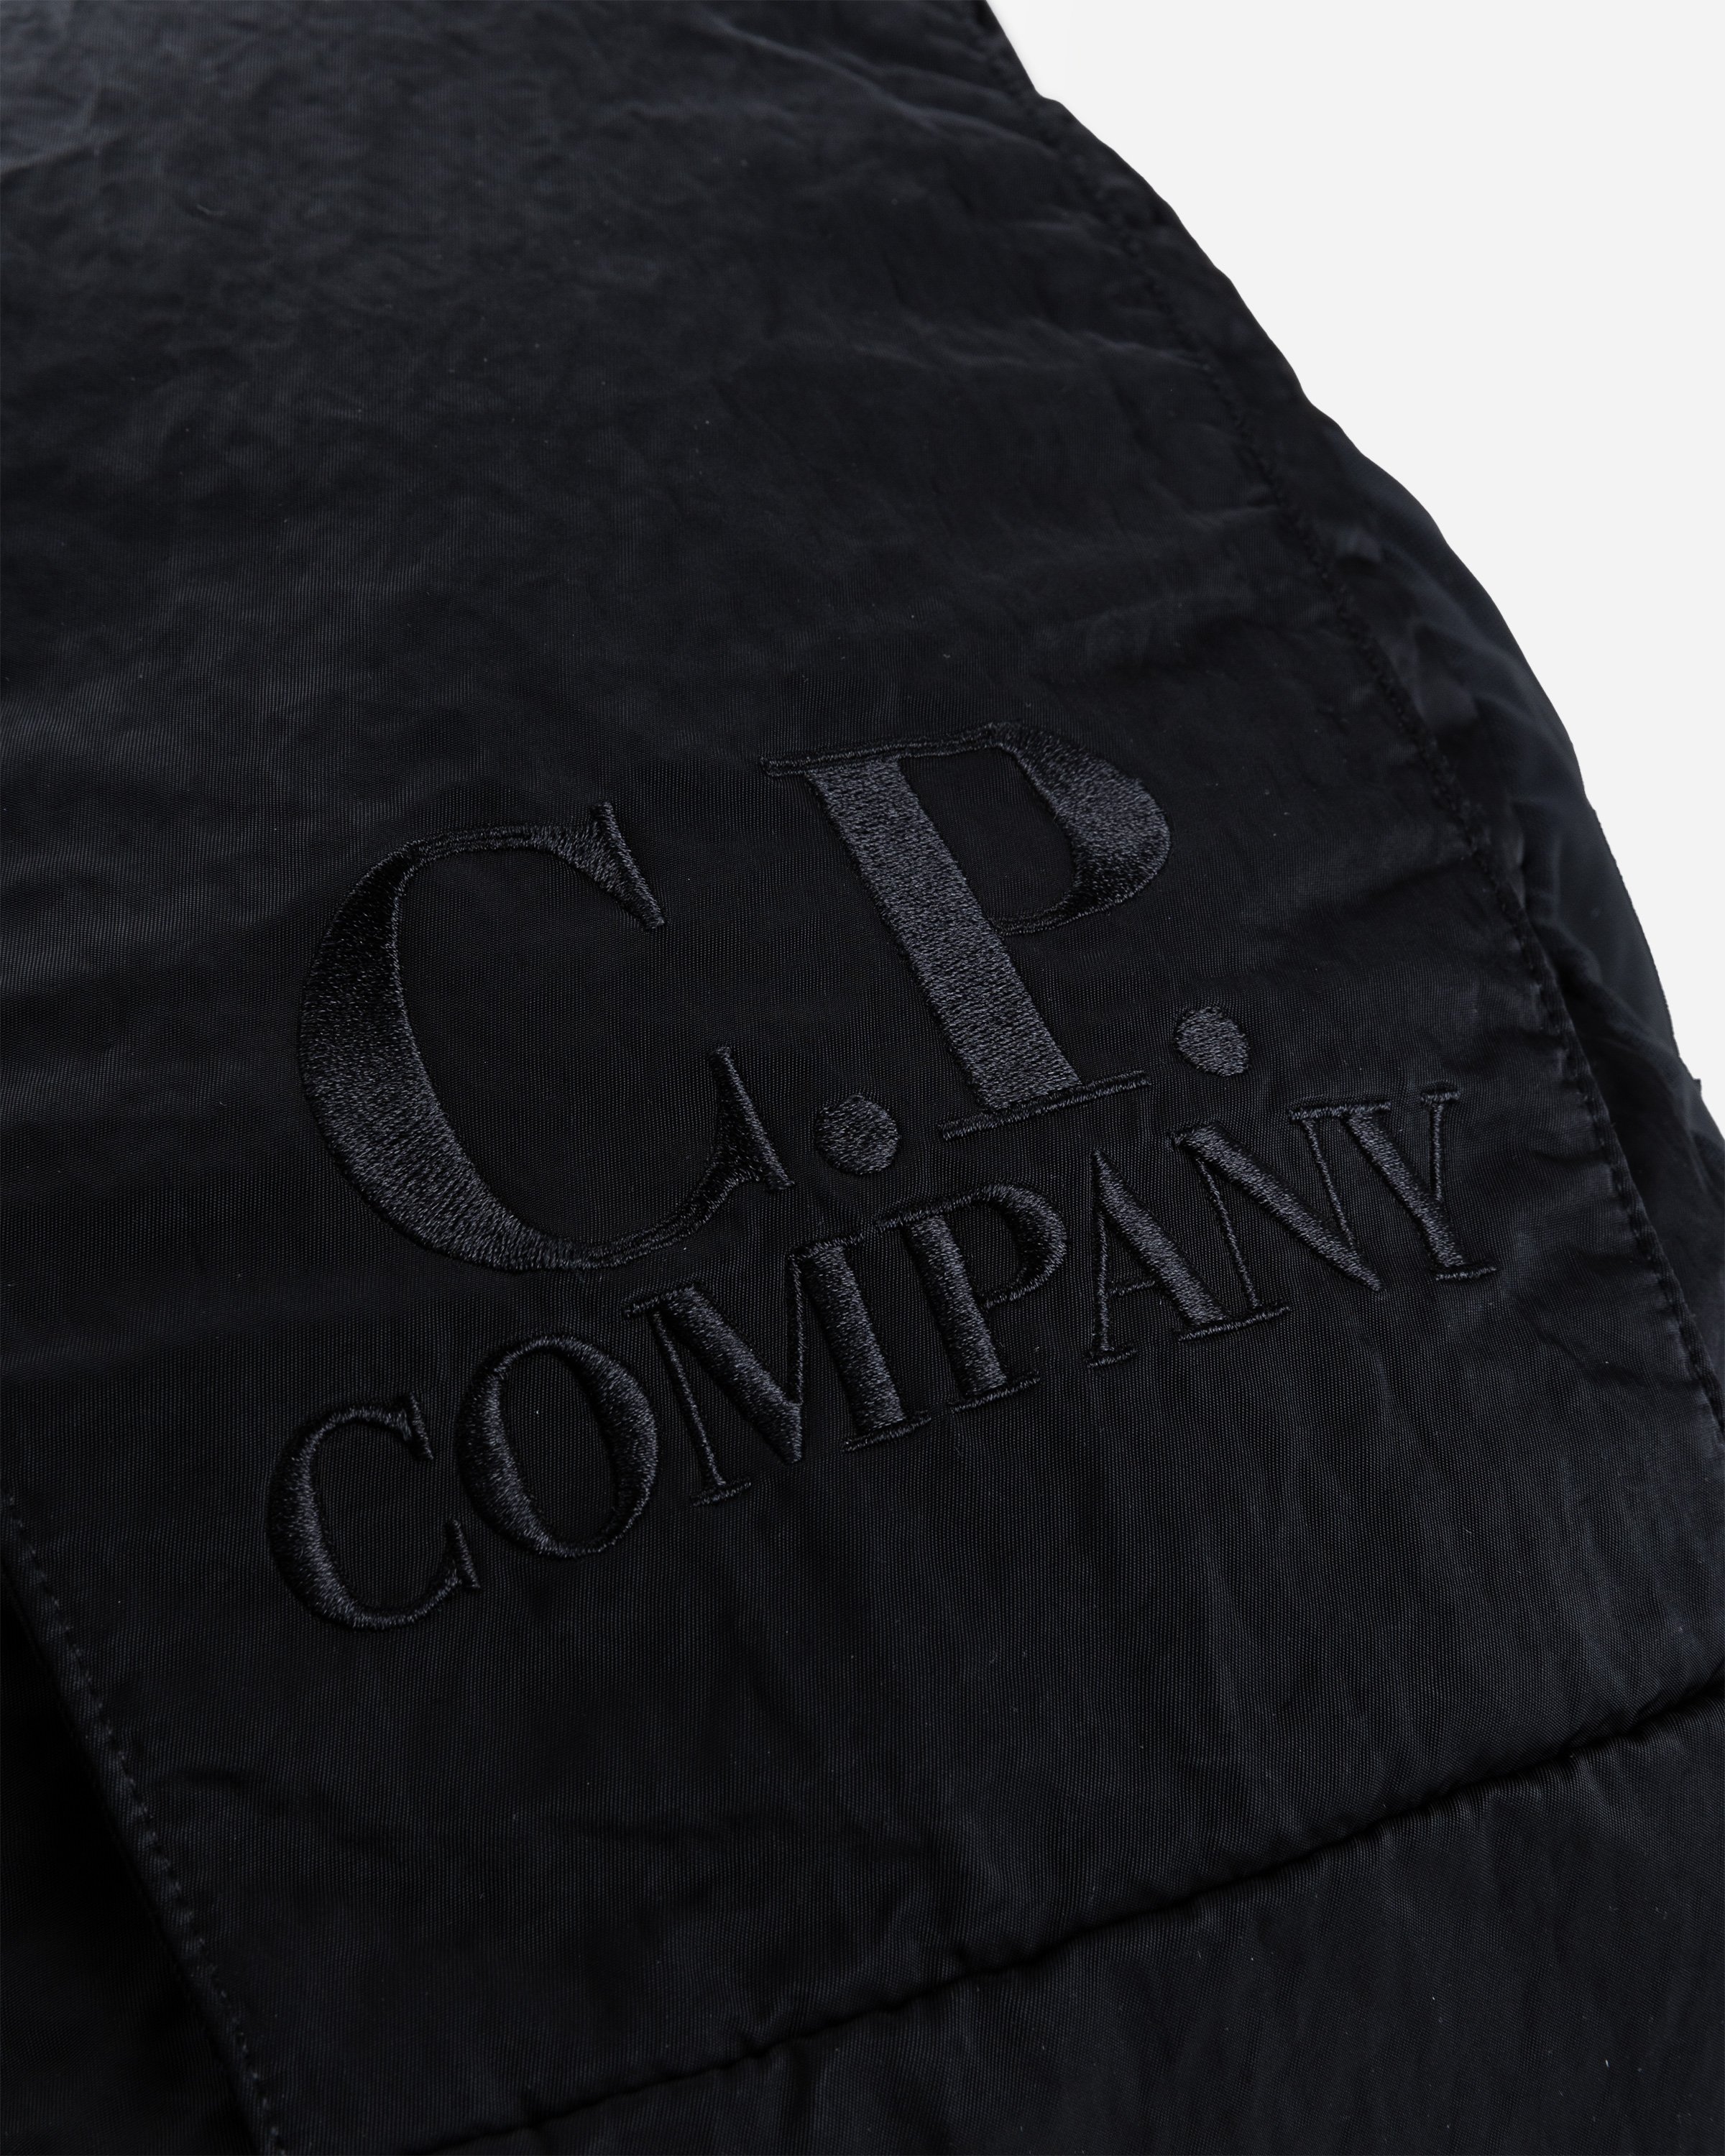 C.P. Company - Nylon B Backpack Black - Accessories - Black - Image 5